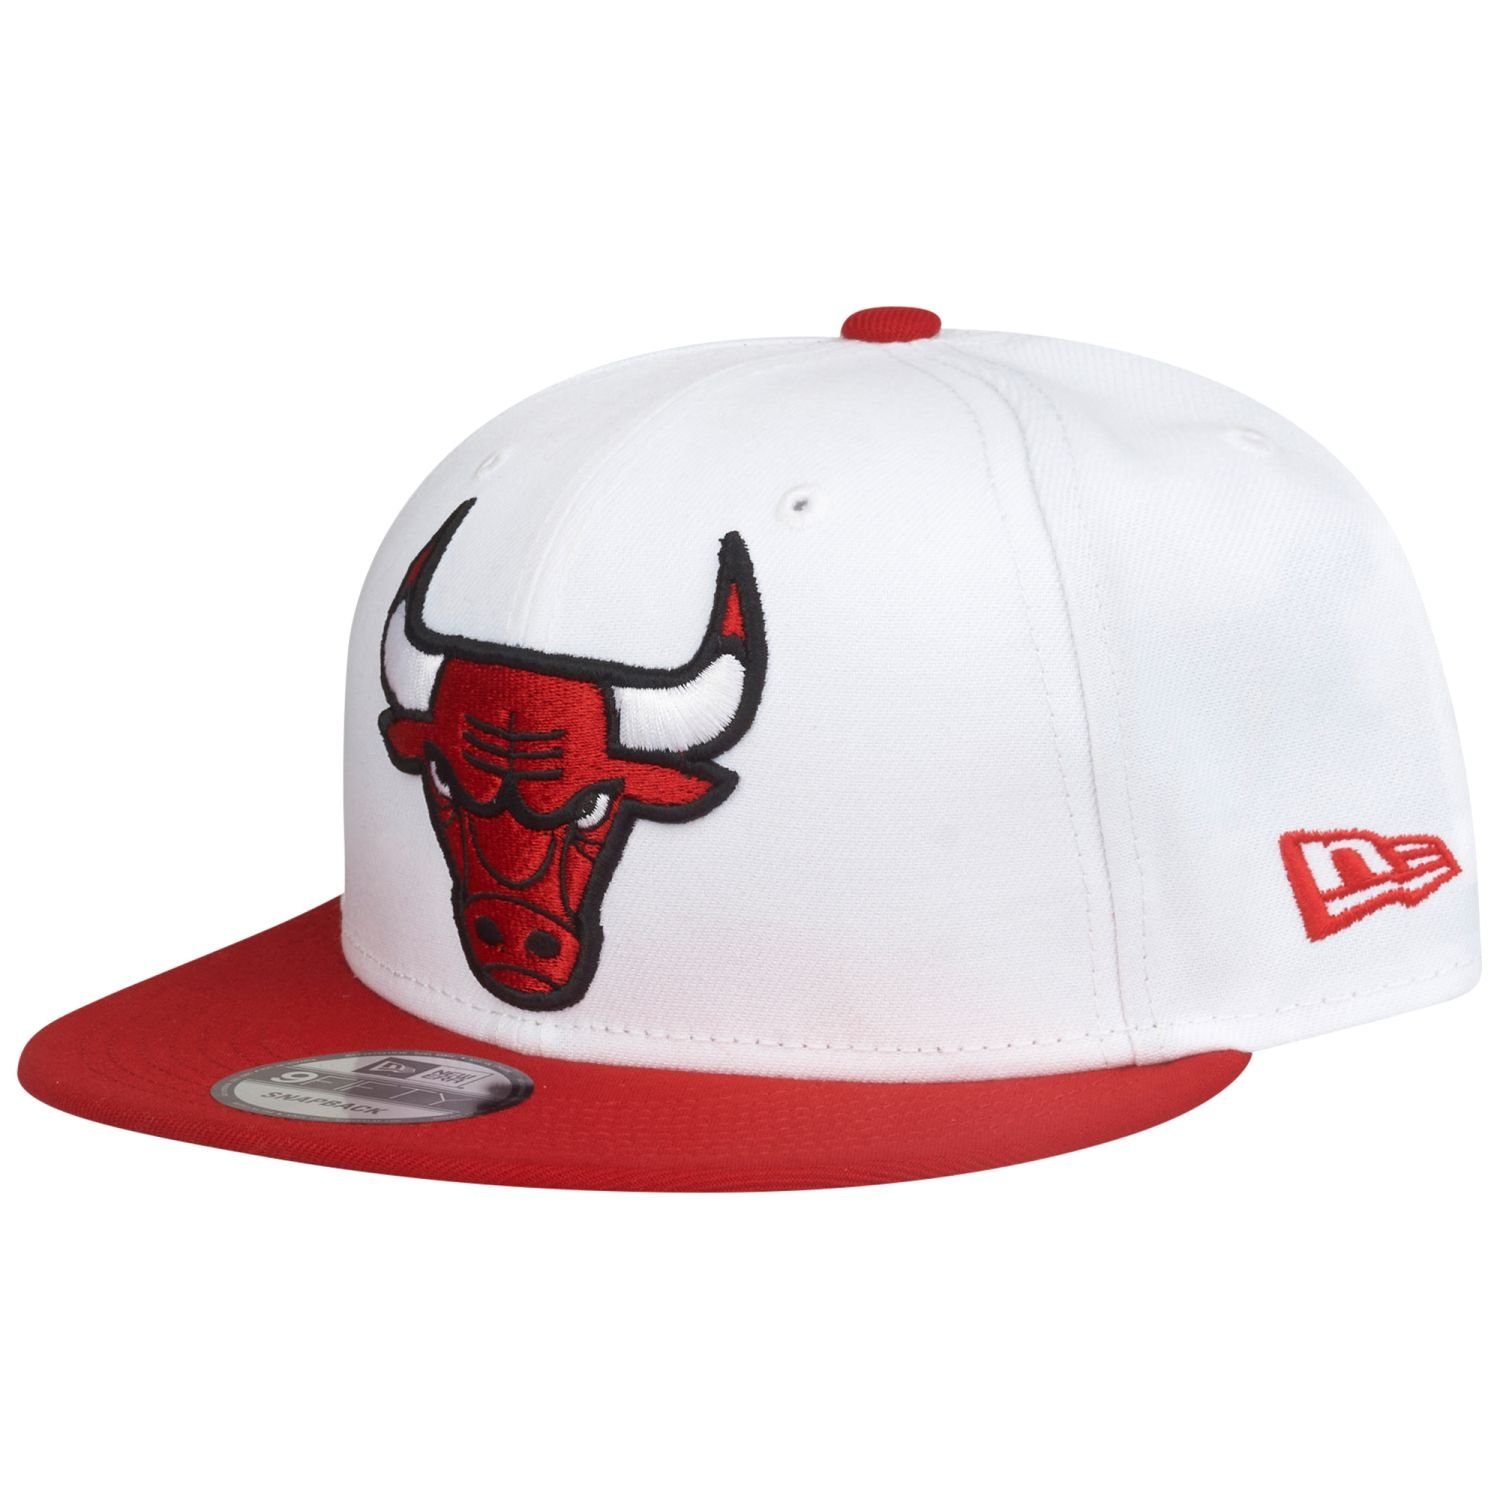 New Snapback Cap 9Fifty LOGO Chicago Bulls Era